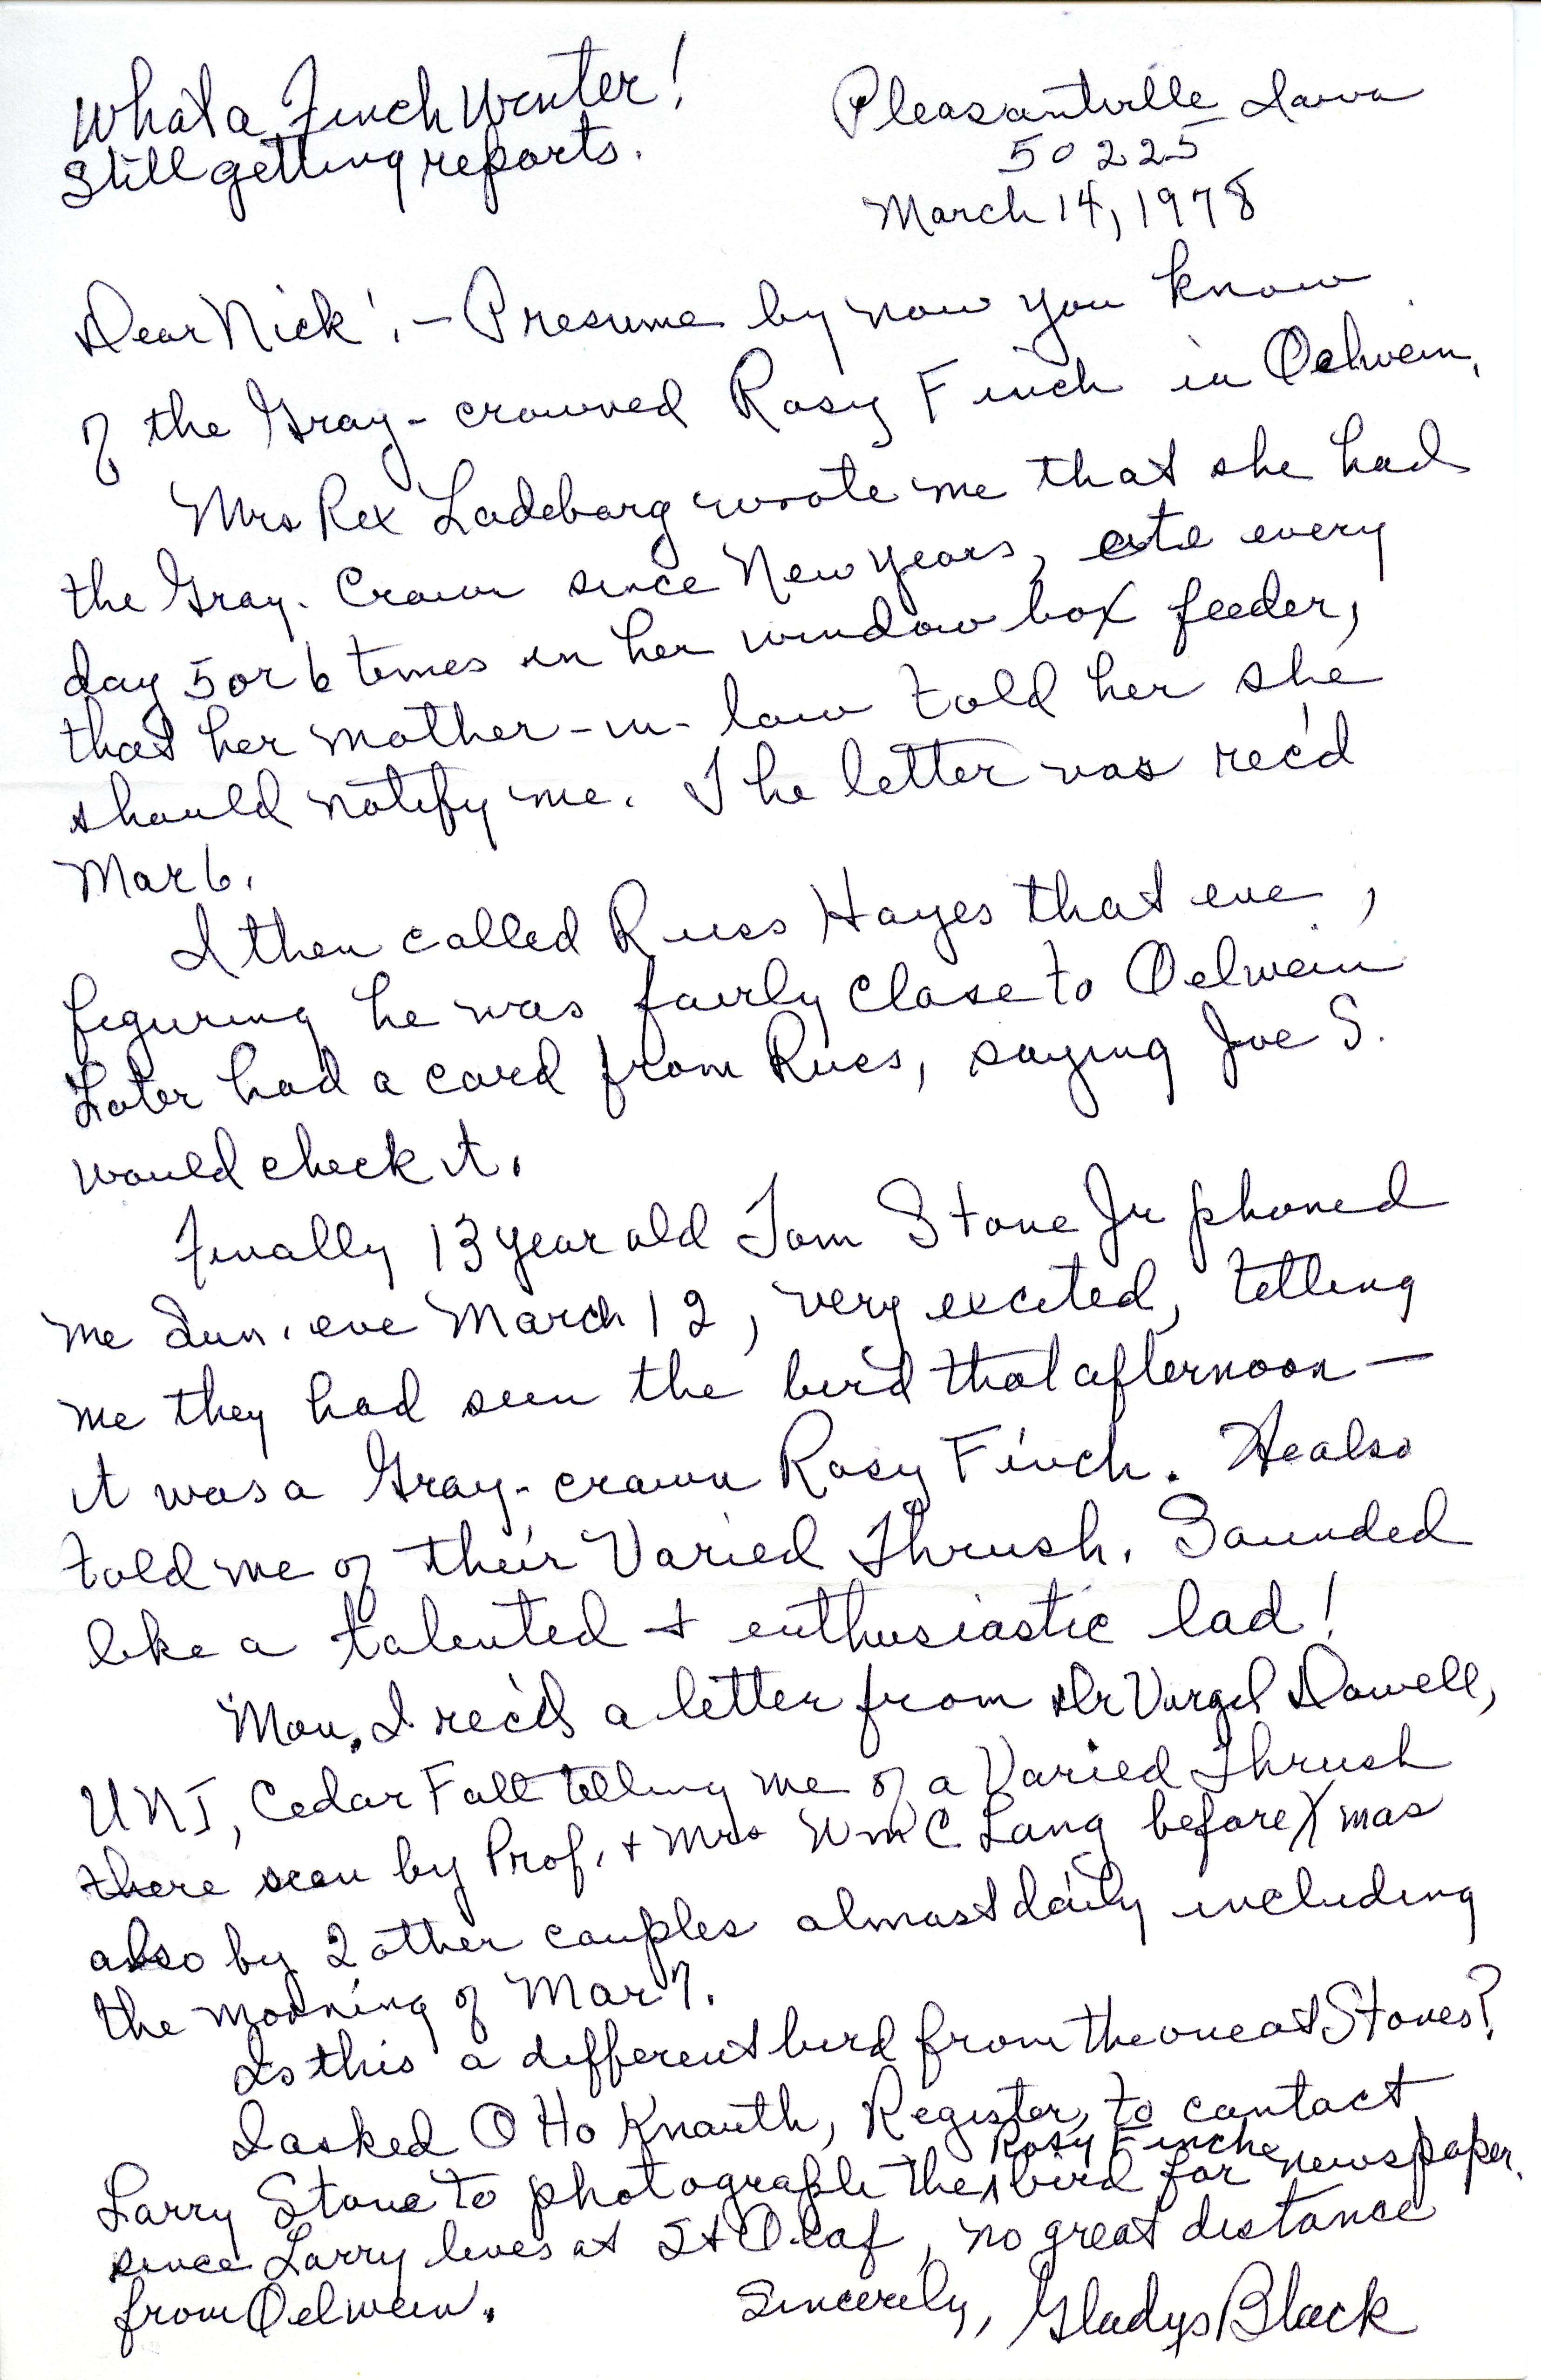 Gladys Black letters to Nicholas S. Halmi regarding bird sightings, March 14 and 21, 1978